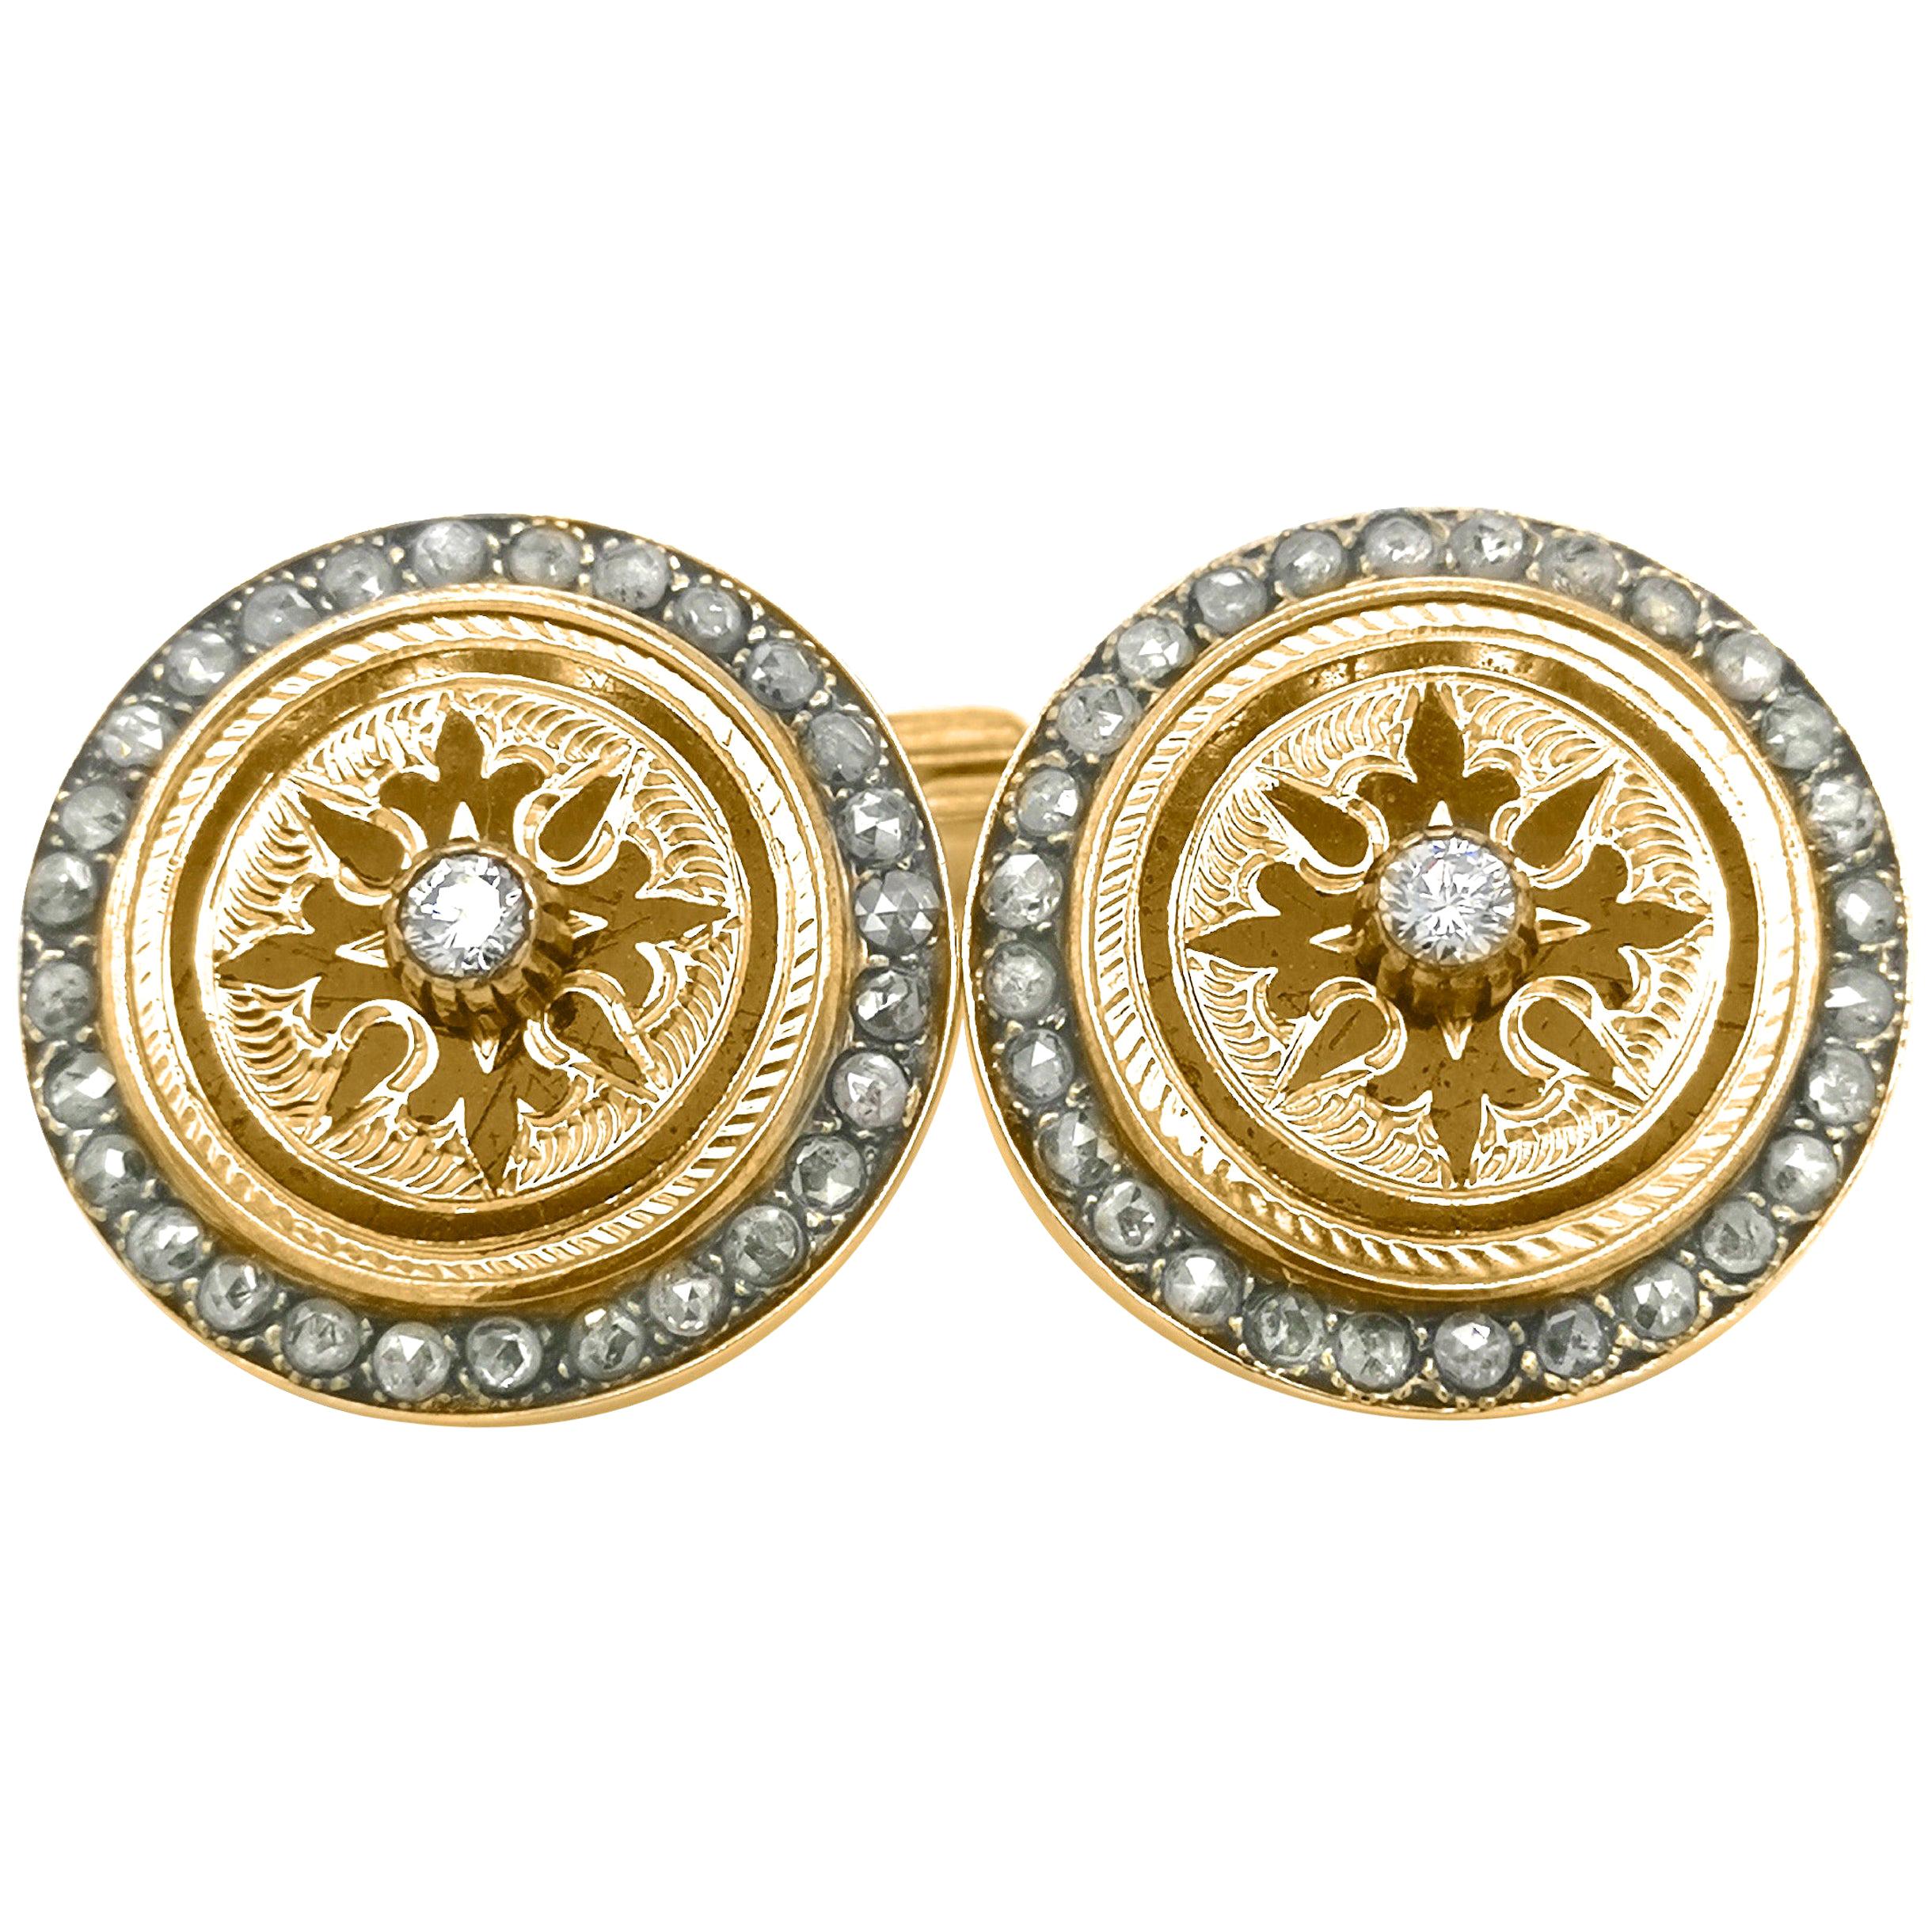 Fabergé, Pair of 14 Karat Yellow Gold Cufflinks with Diamond